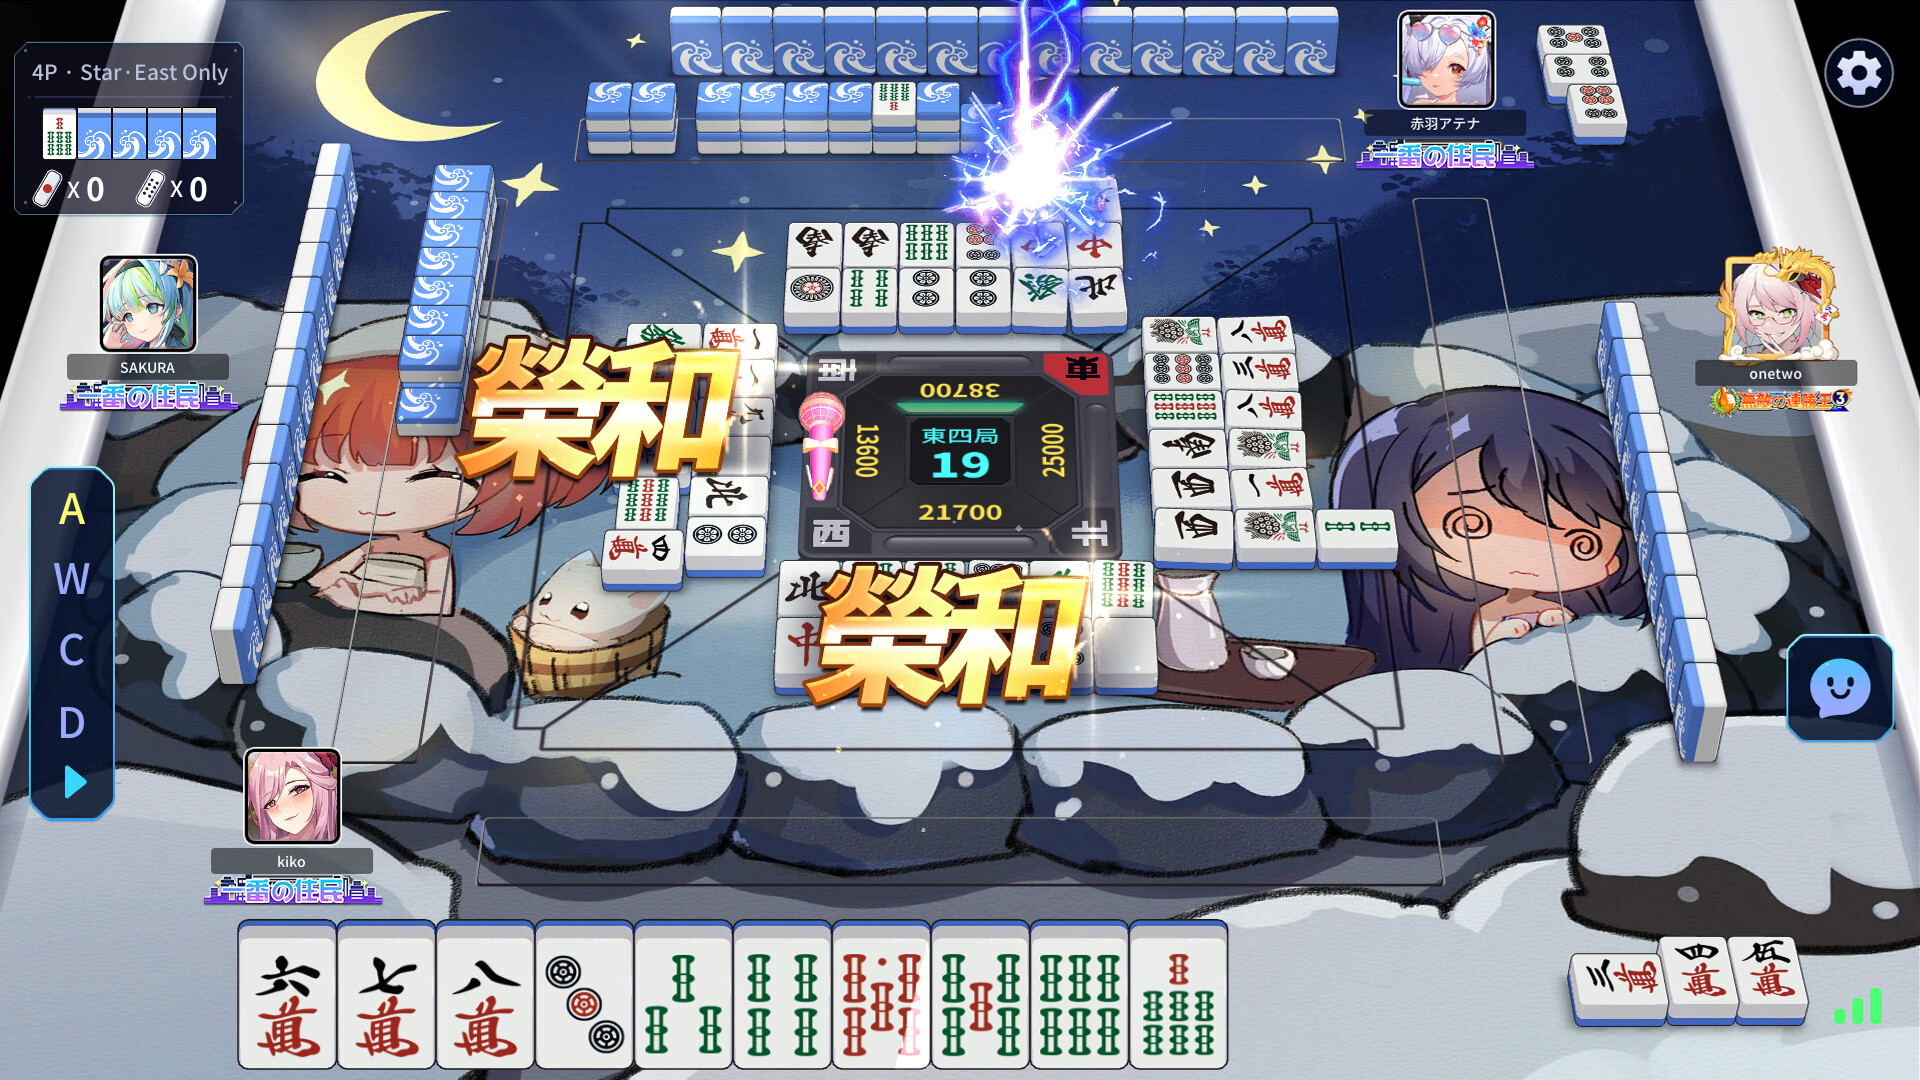 What's On Steam - Riichi City - Japanese Mahjong Online